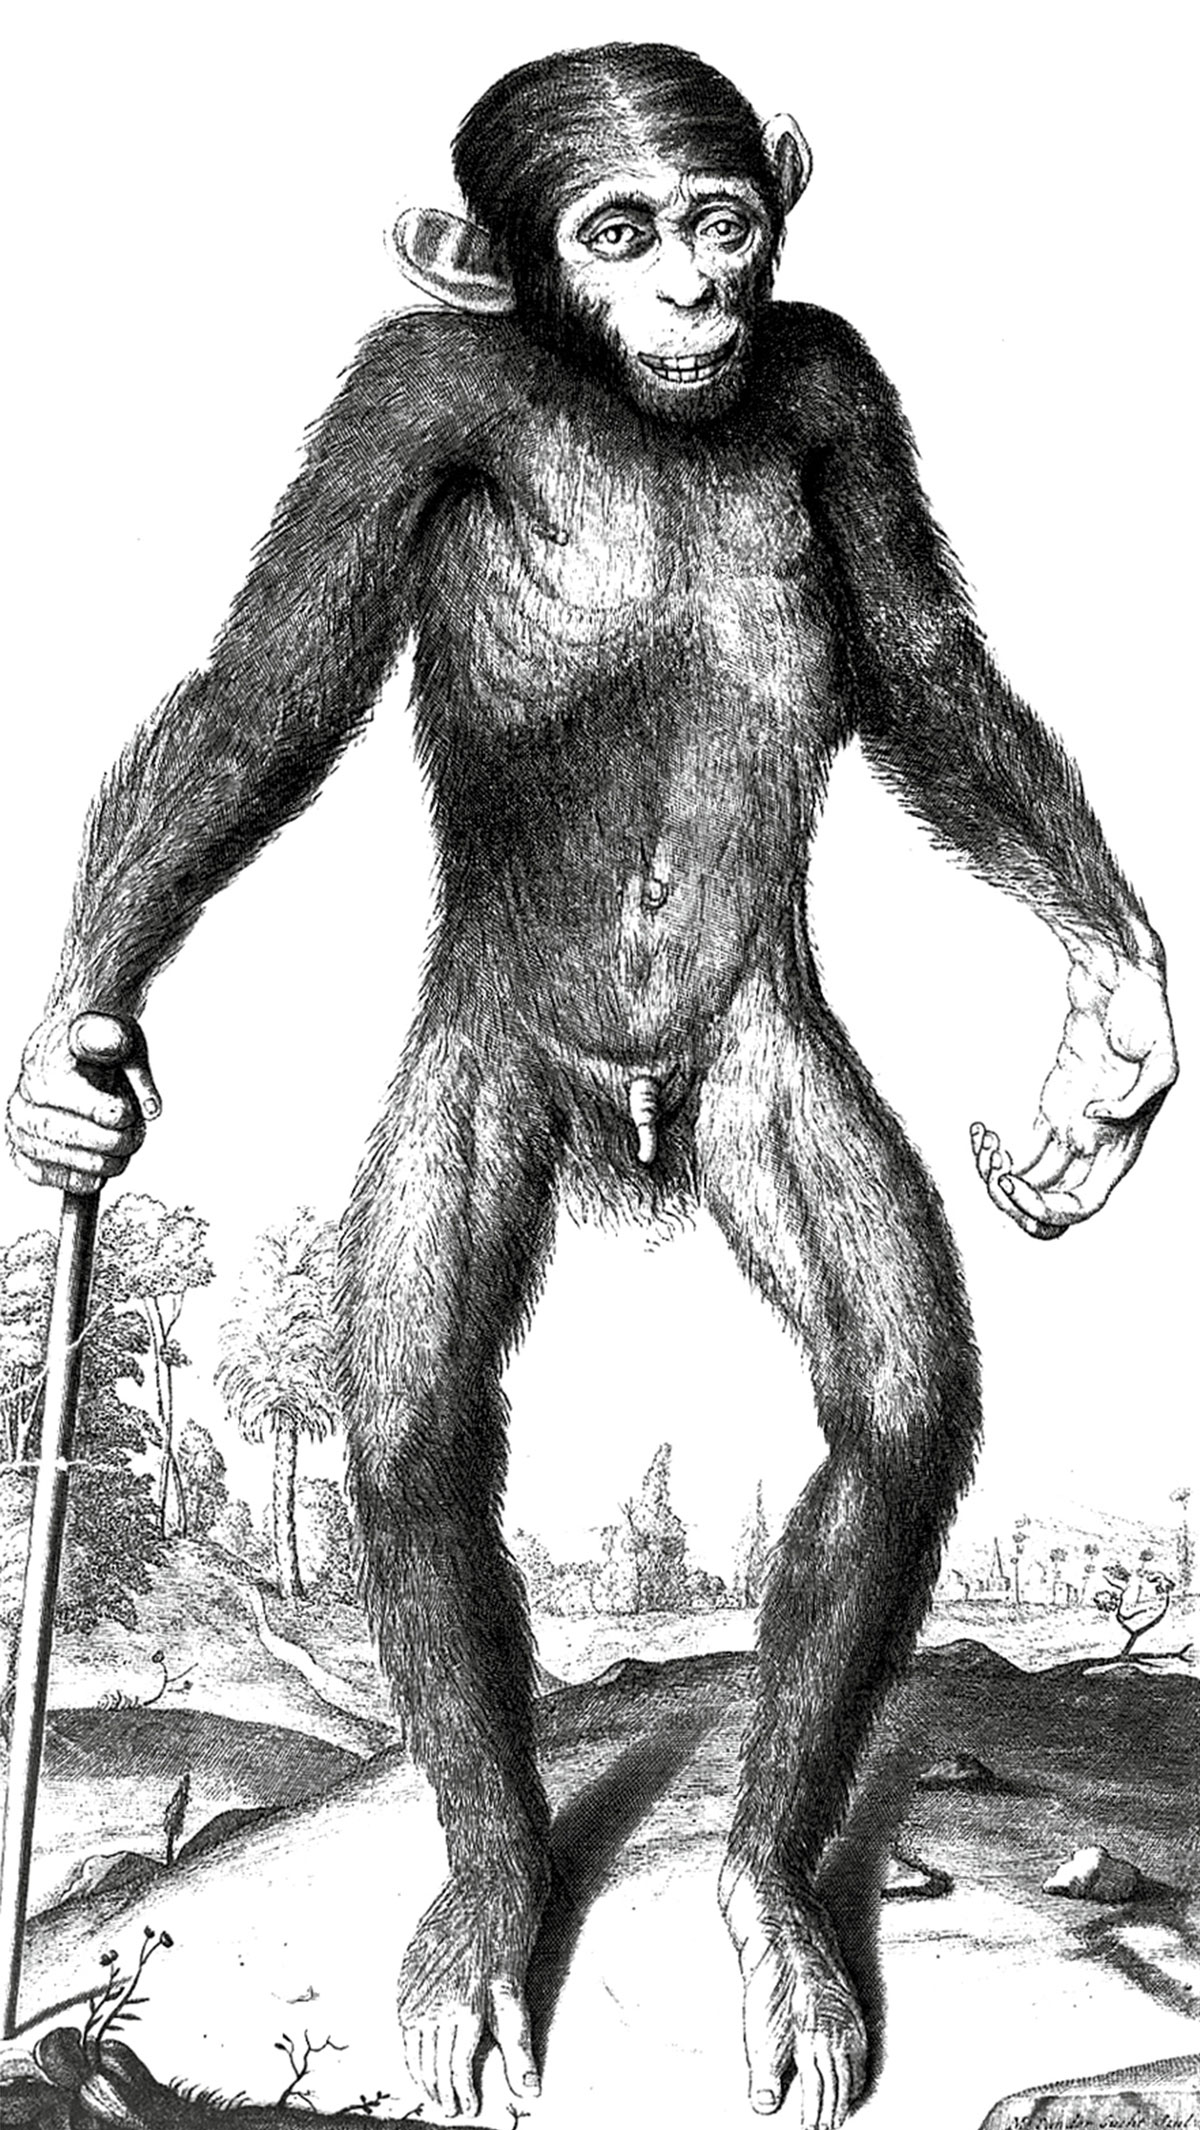 Edward Tyson’s “orang-outang,” in reality a chimpanzee. From Tyson’s 1699 study Orang-Outang sive homo silvestris. Courtesy Wellcome Library.